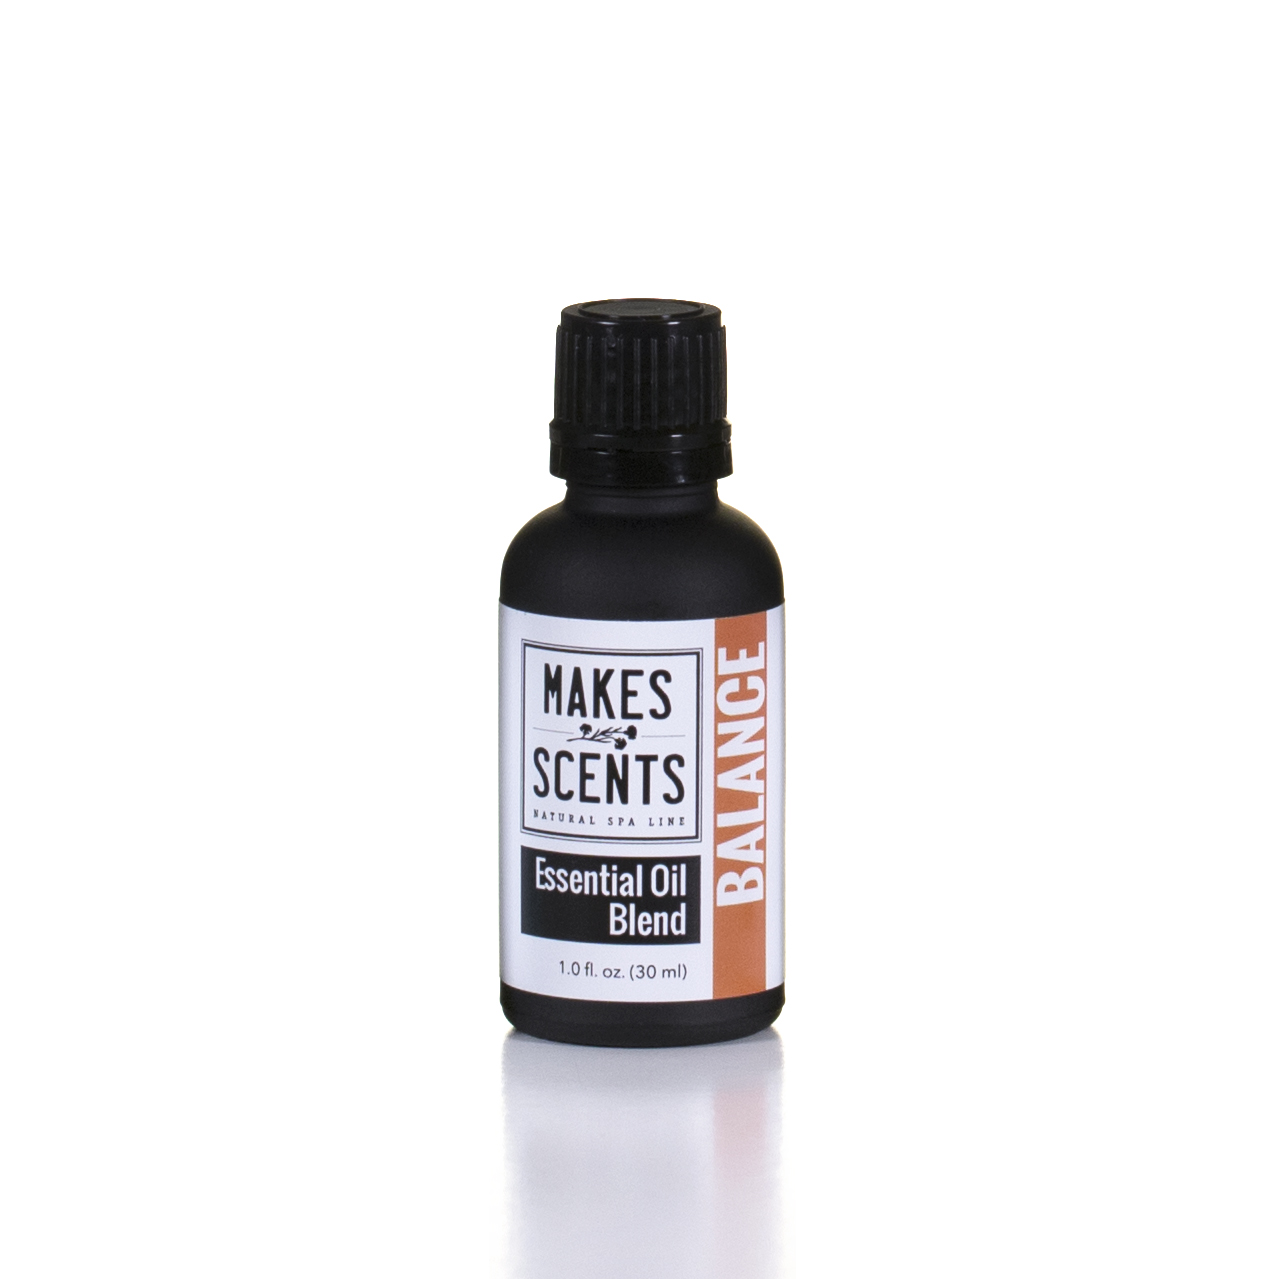 Balance Essential Oil Blend | Makes Scents Natural Spa Line